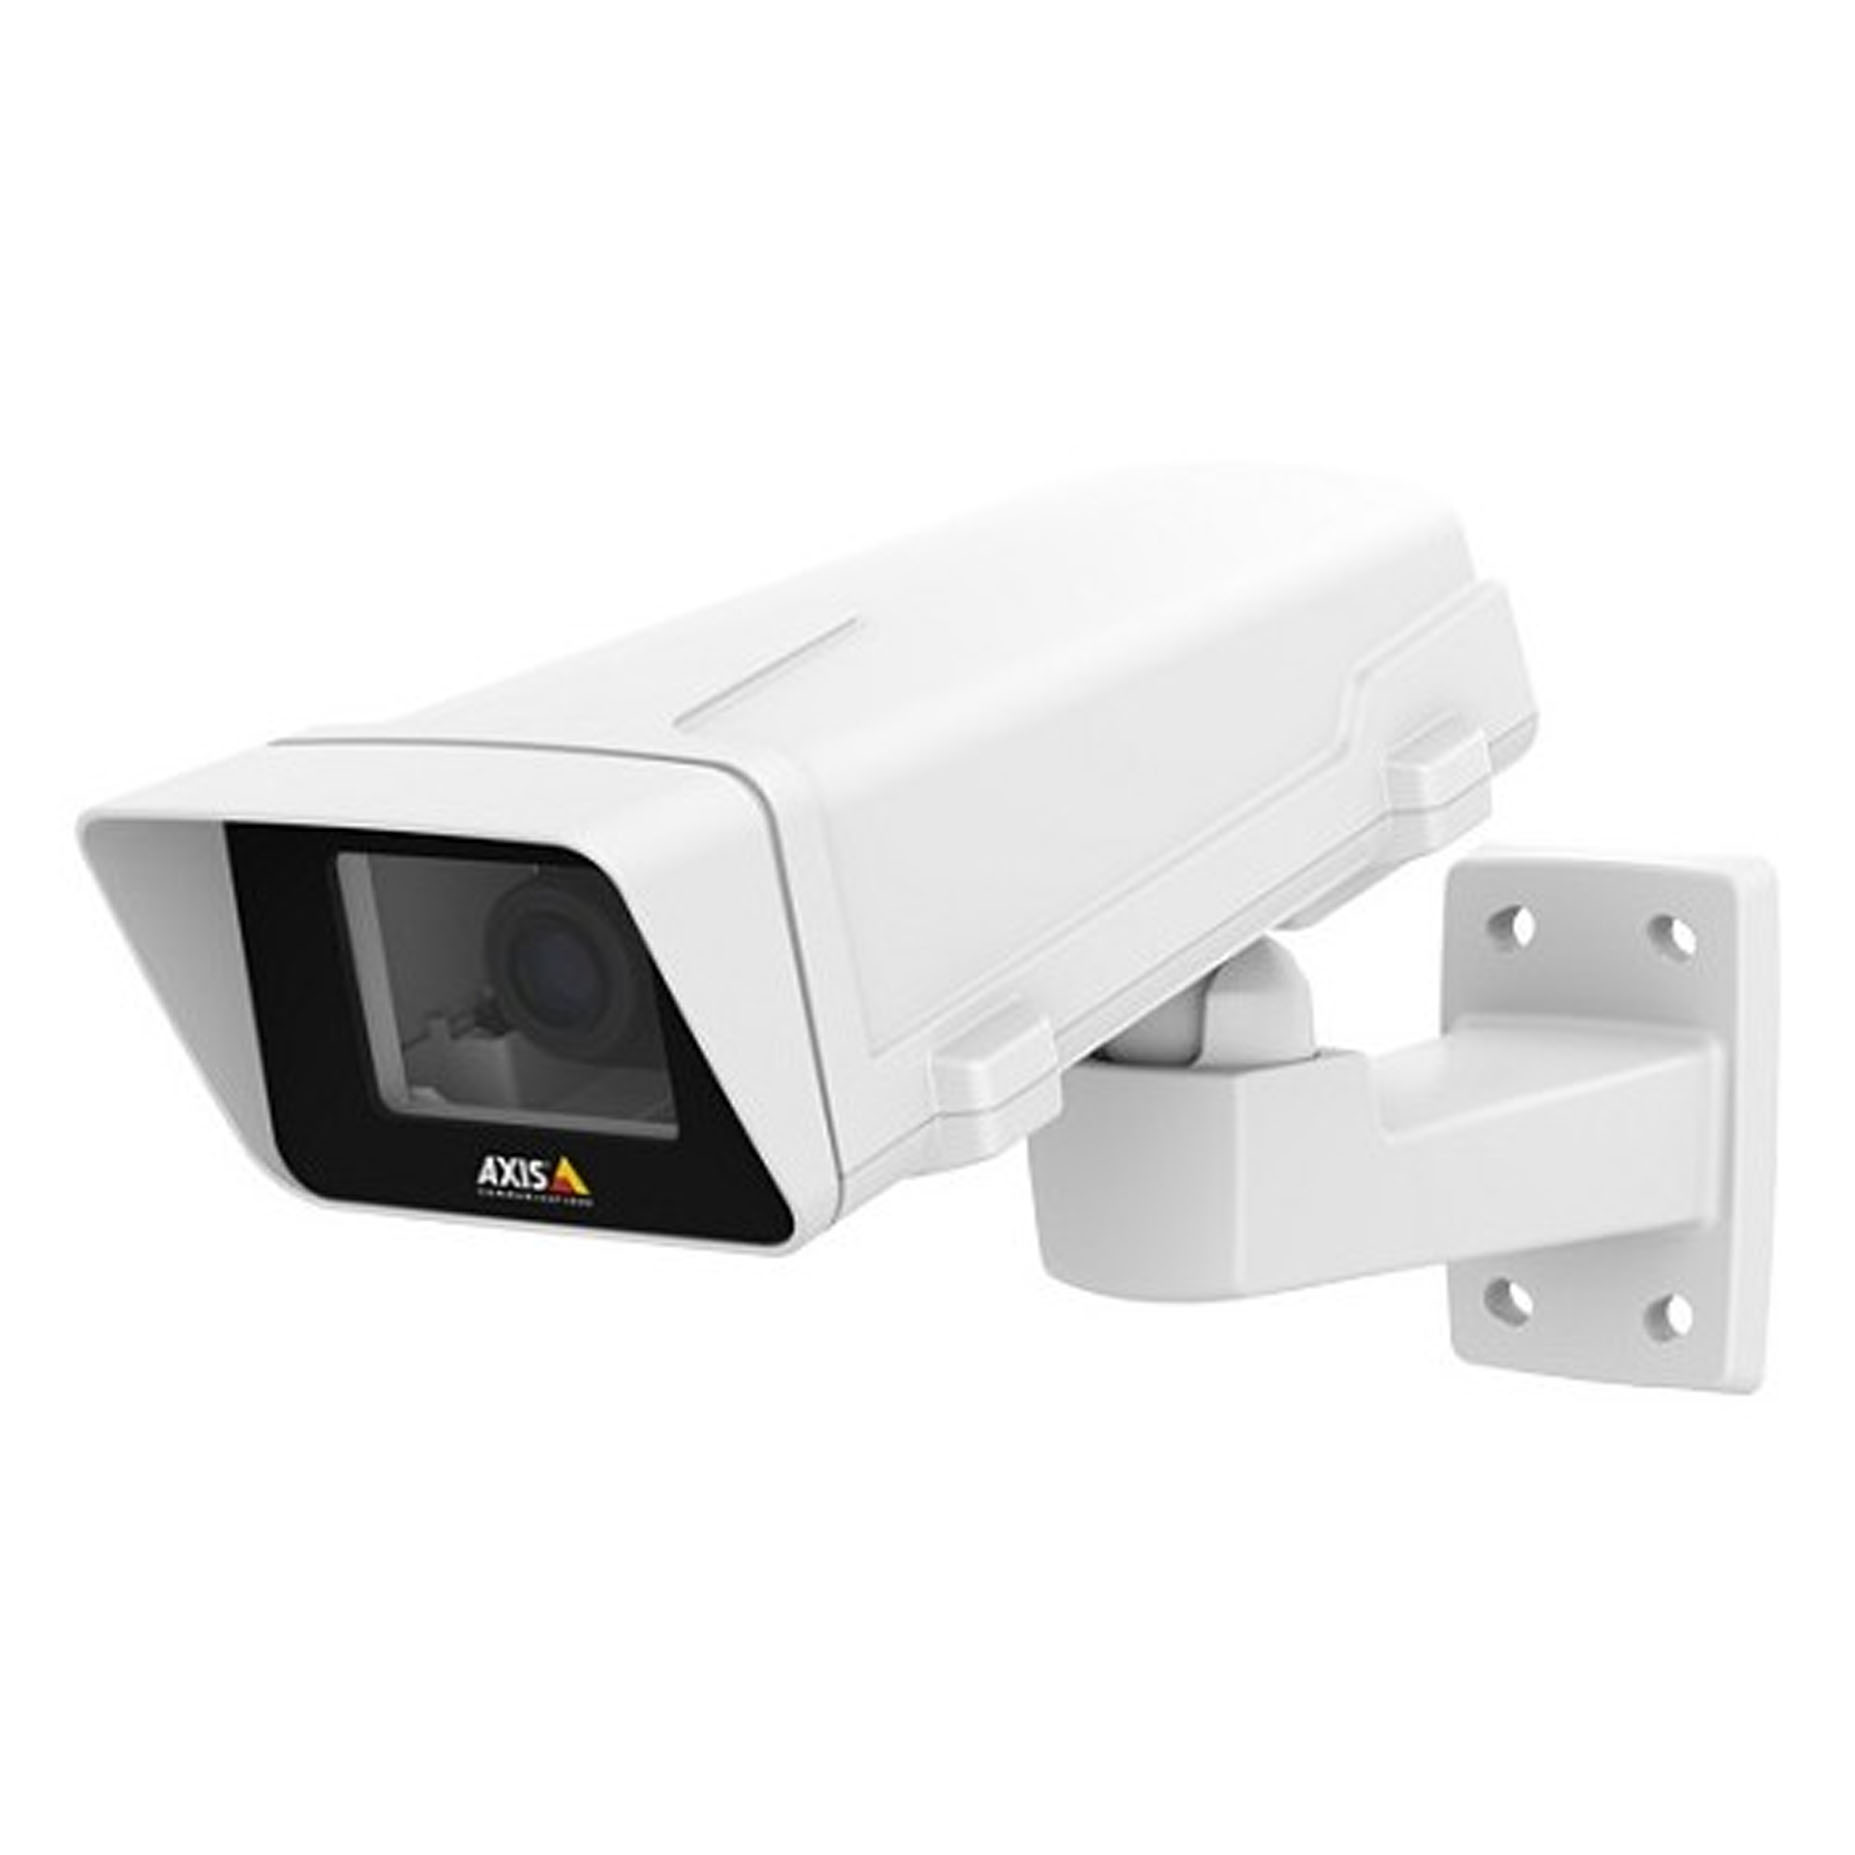 Harga Jual AXIS M1124-E Network Camera Outdoor-ready and affordable HDTV 720p camera